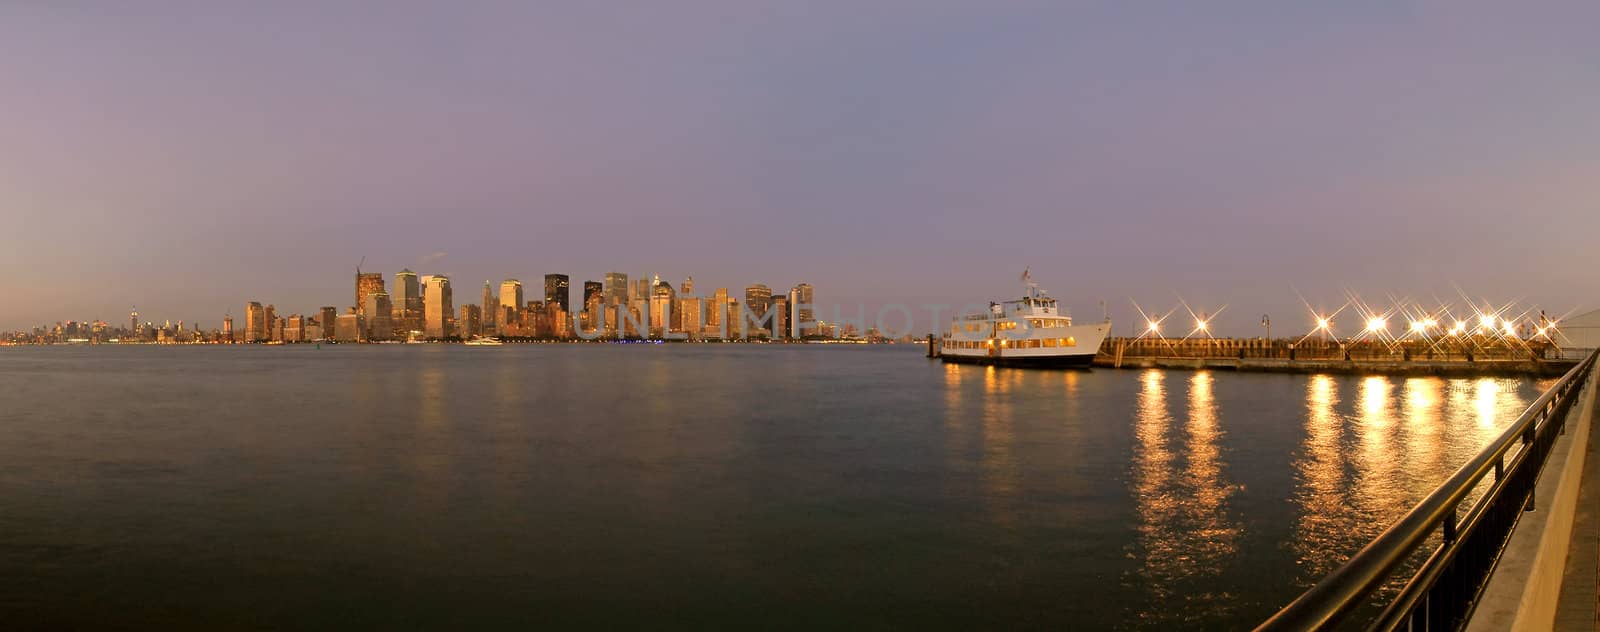 New York at night panorama, photo taken from Jersey City, New Jersey, USA